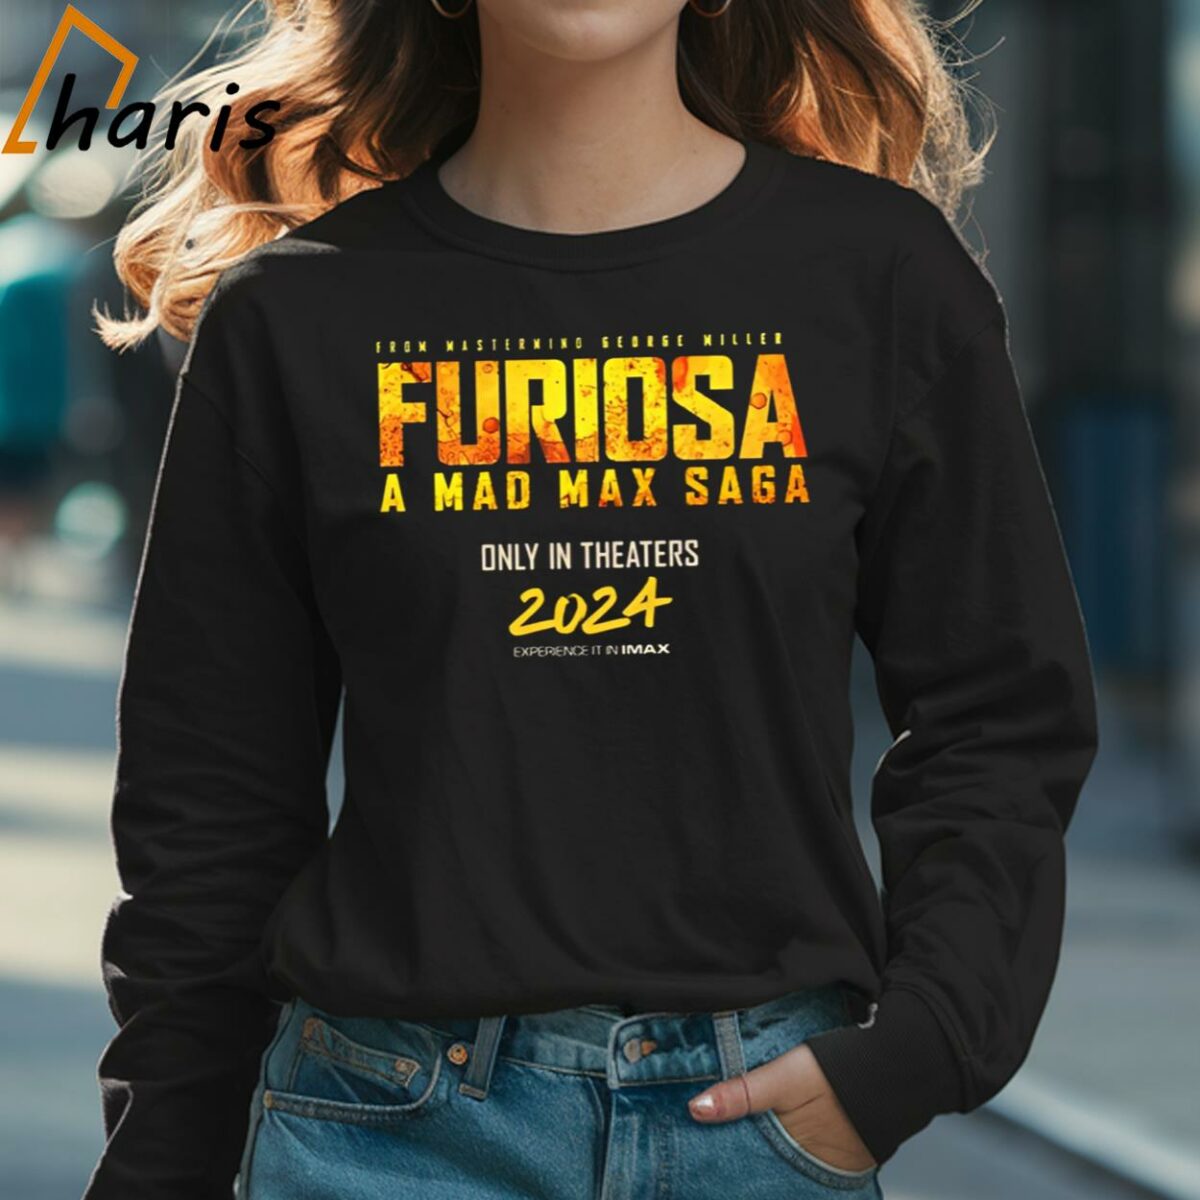 Furiosa A Mad Max Saga 2024 Movie T shirt 3 Long sleeve shirt